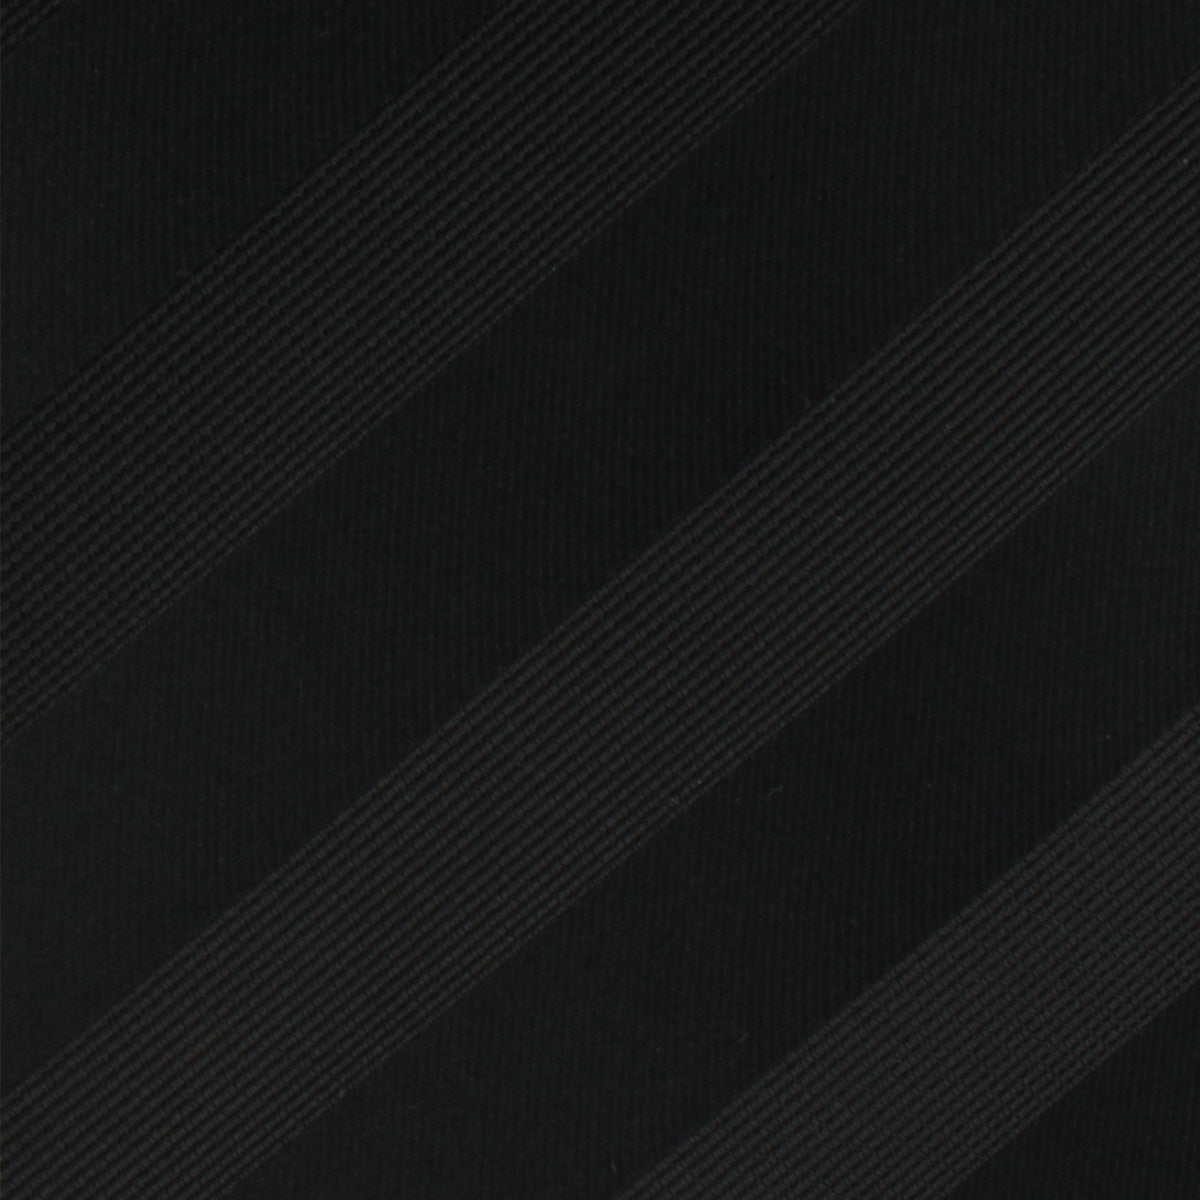 Sinatra Black Striped Bow Tie Fabric